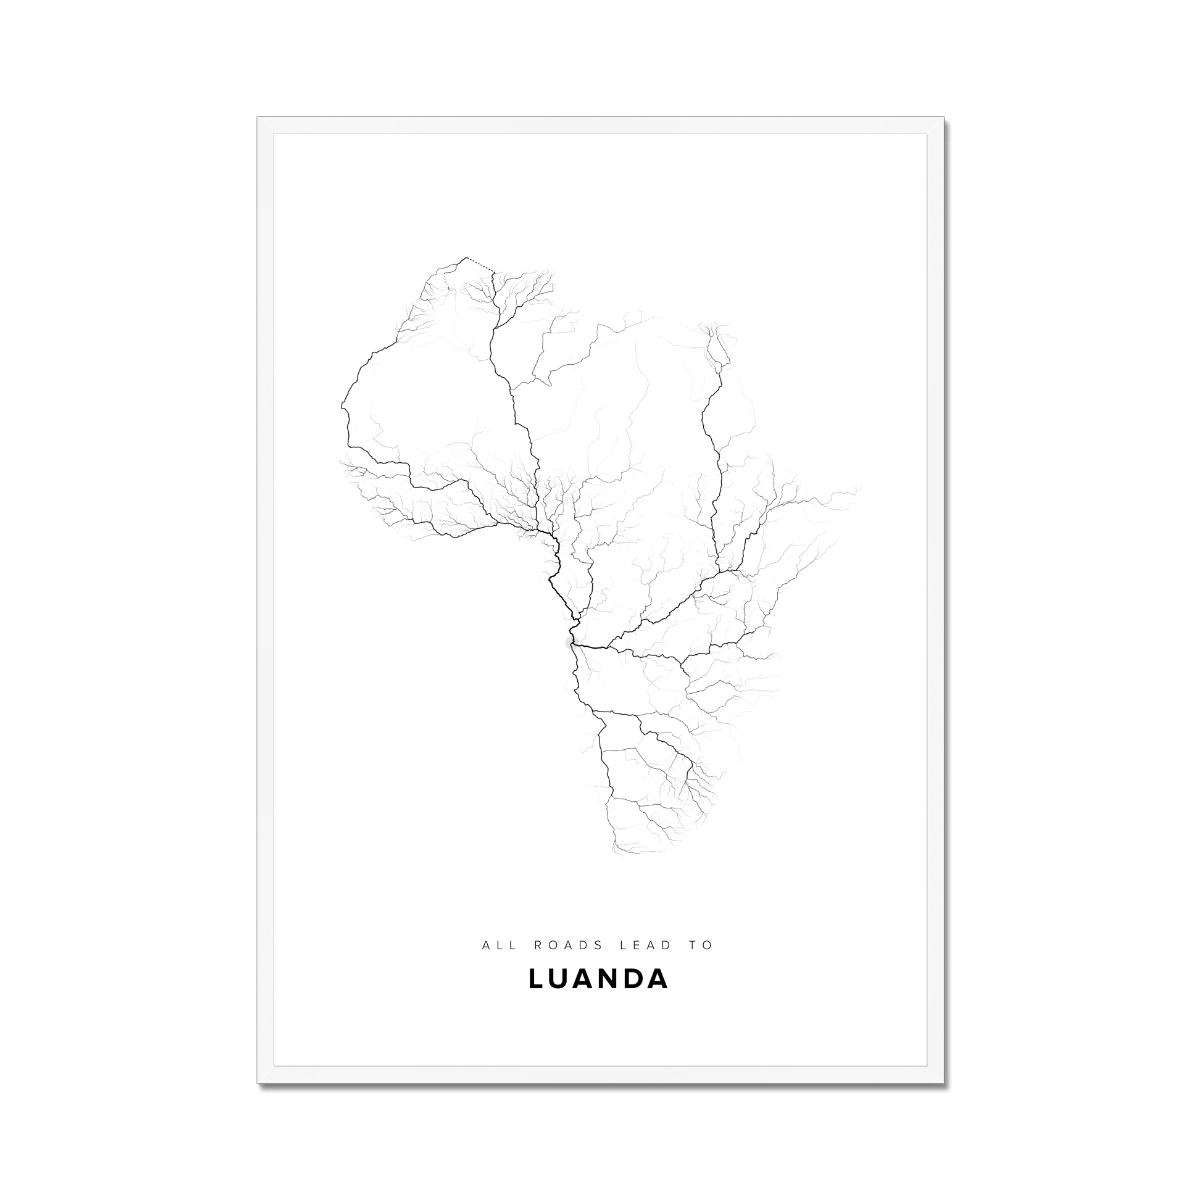 All roads lead to Luanda (Angola) Fine Art Map Print